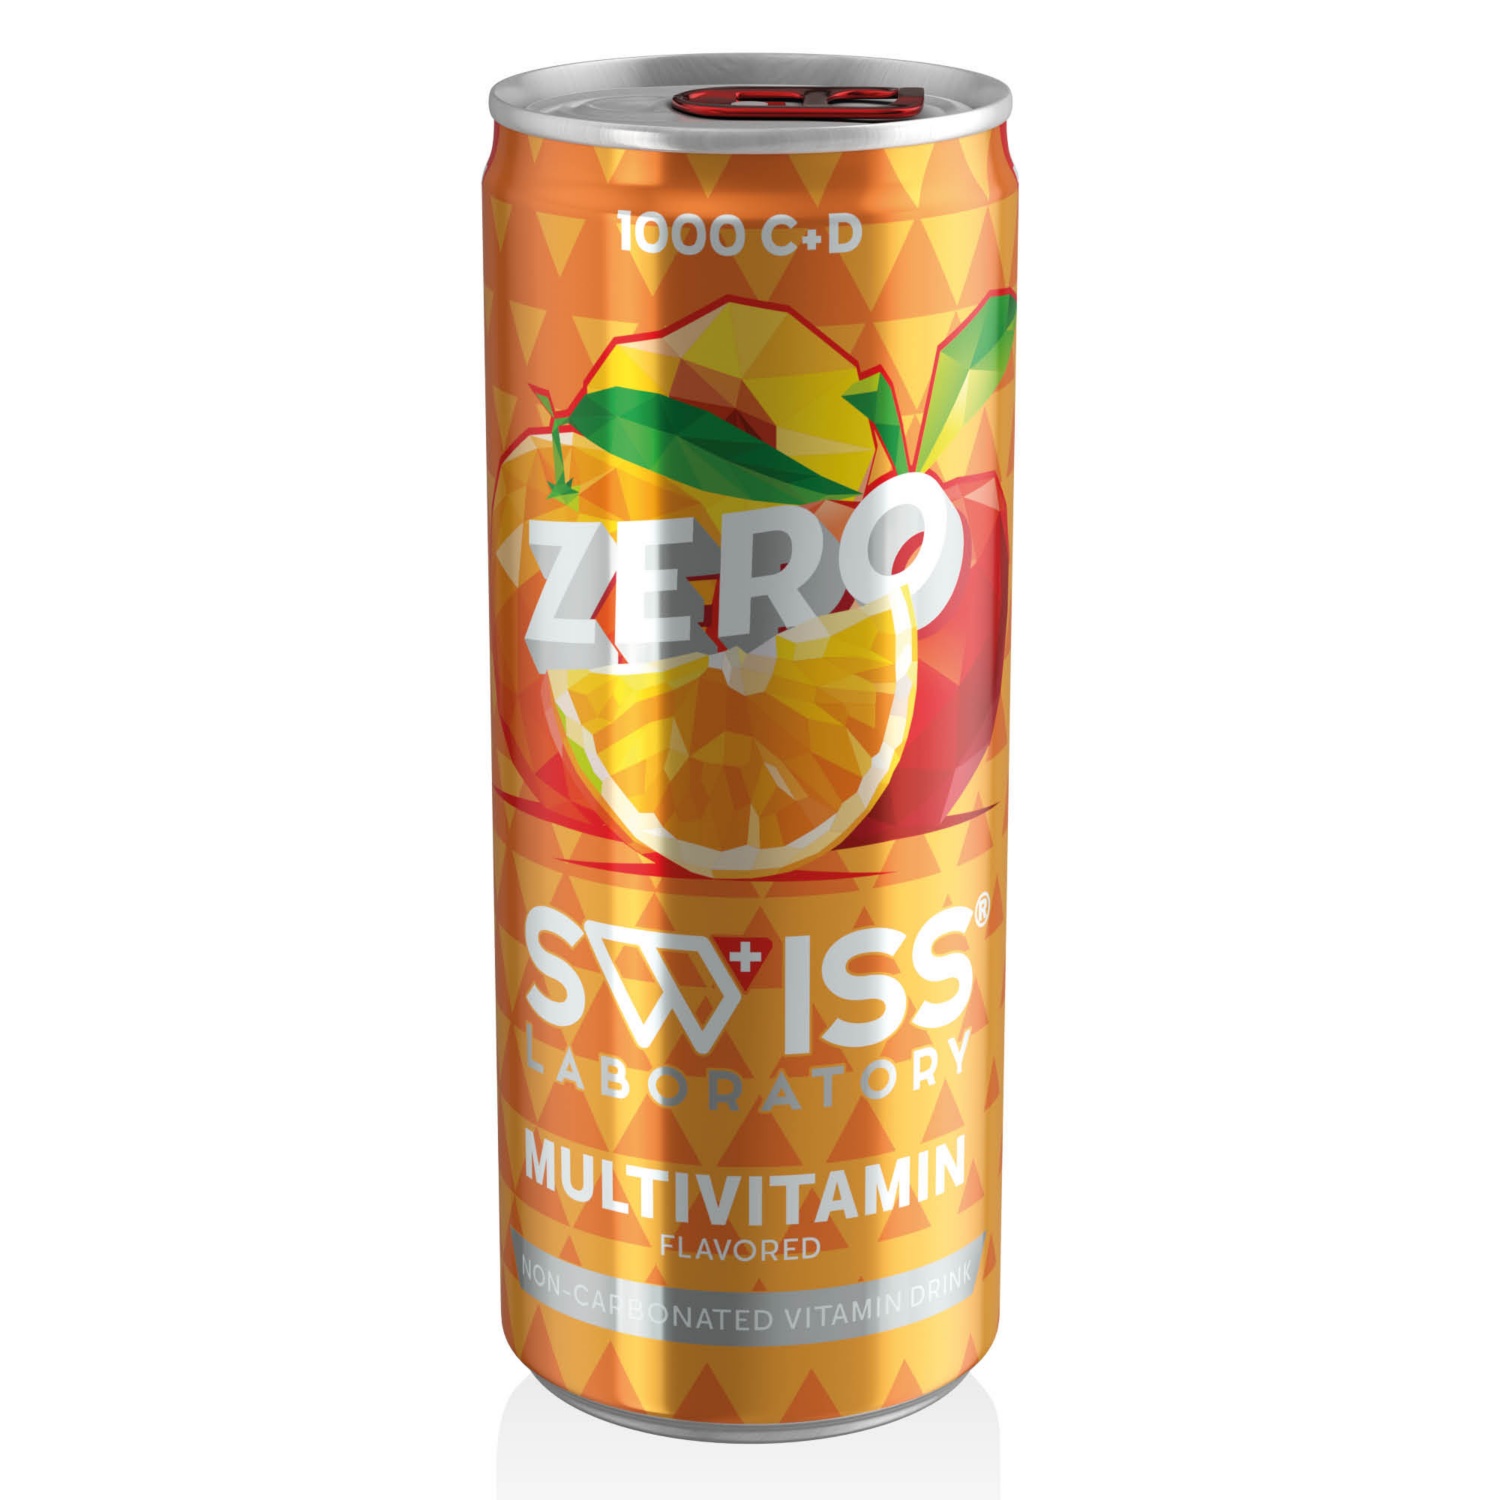 SWISS LABORATORY Vitaminital 250 ml, Delavie zero 1000 C+D